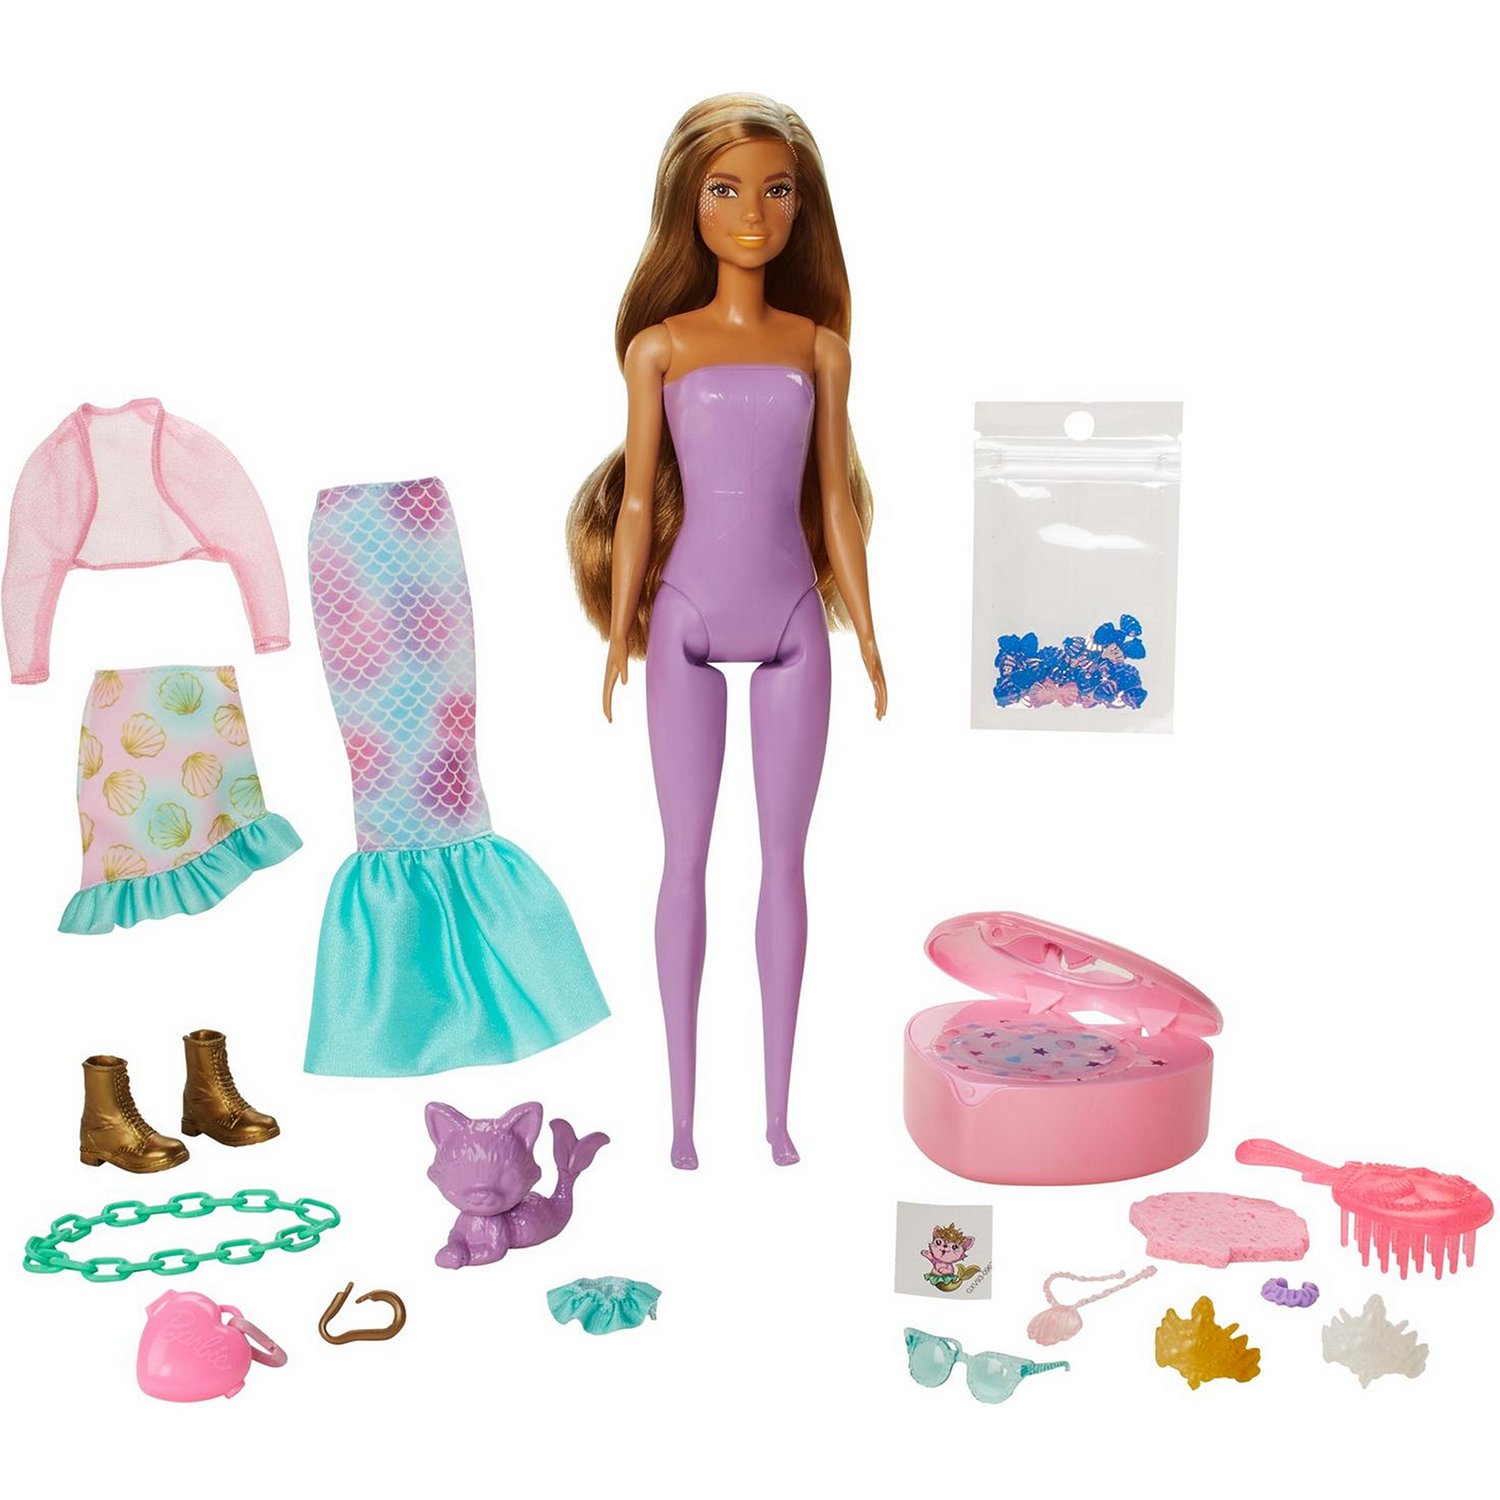 Кукла Barbie с сюрпризами внутри упаковки Русалка, GXV93